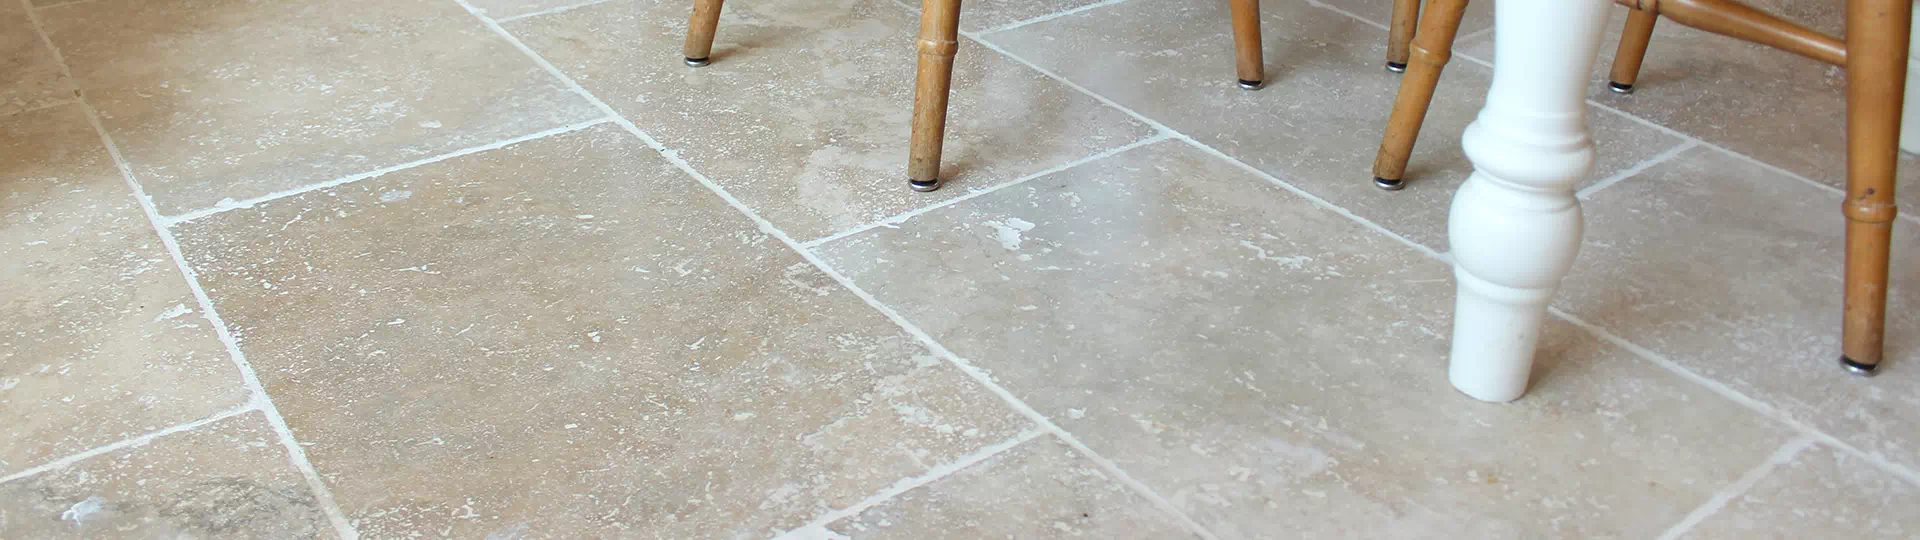 How To Clean Travertine Floors Simple, Travertine Tile Floors